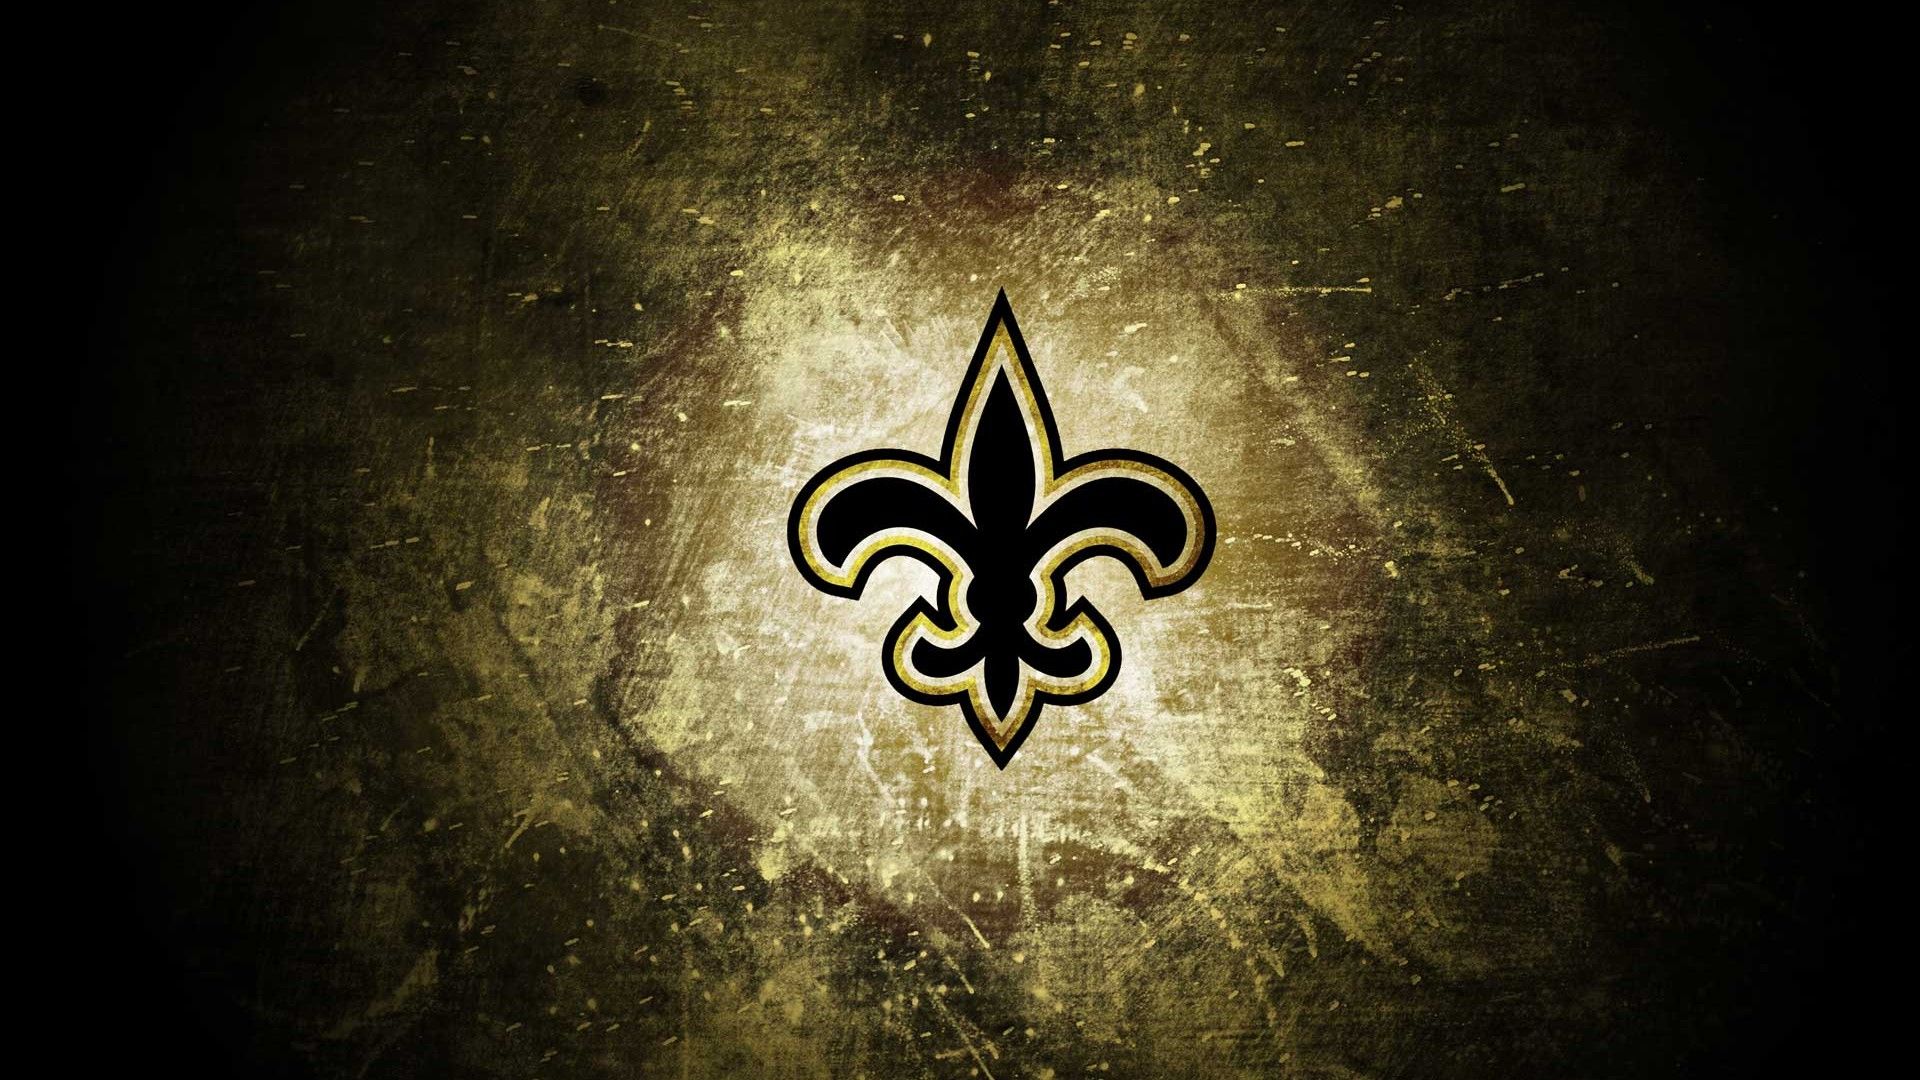 HD New Orleans Saints Wallpaper NFL Football Wallpaper. Football wallpaper, New orleans saints, Nfl football wallpaper